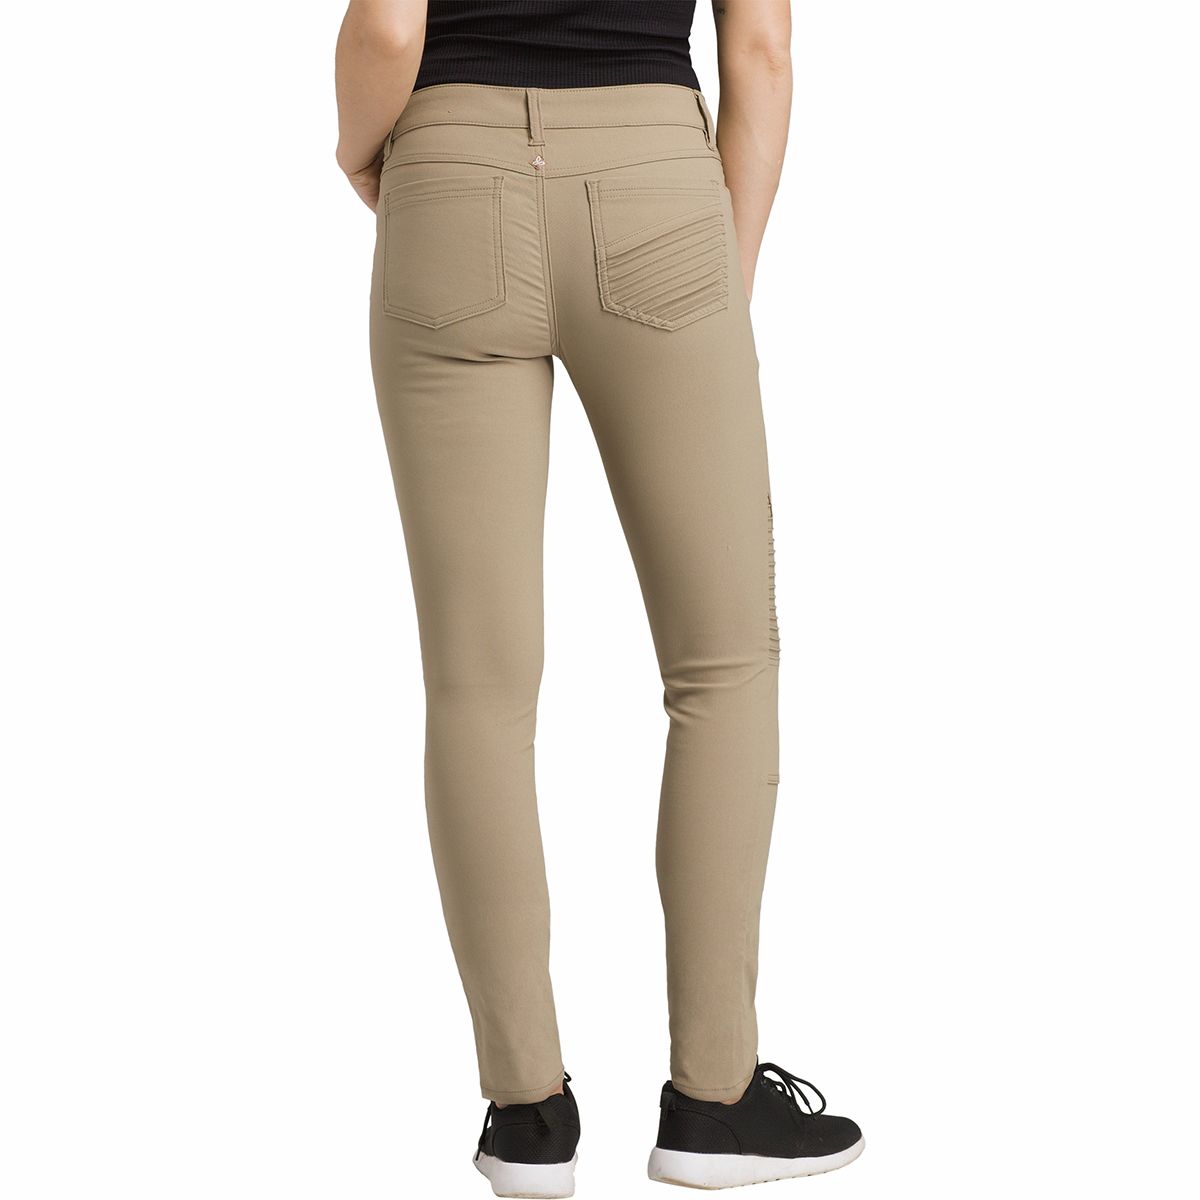  prAna Women's Standard Brenna Pant-Regular Inseam